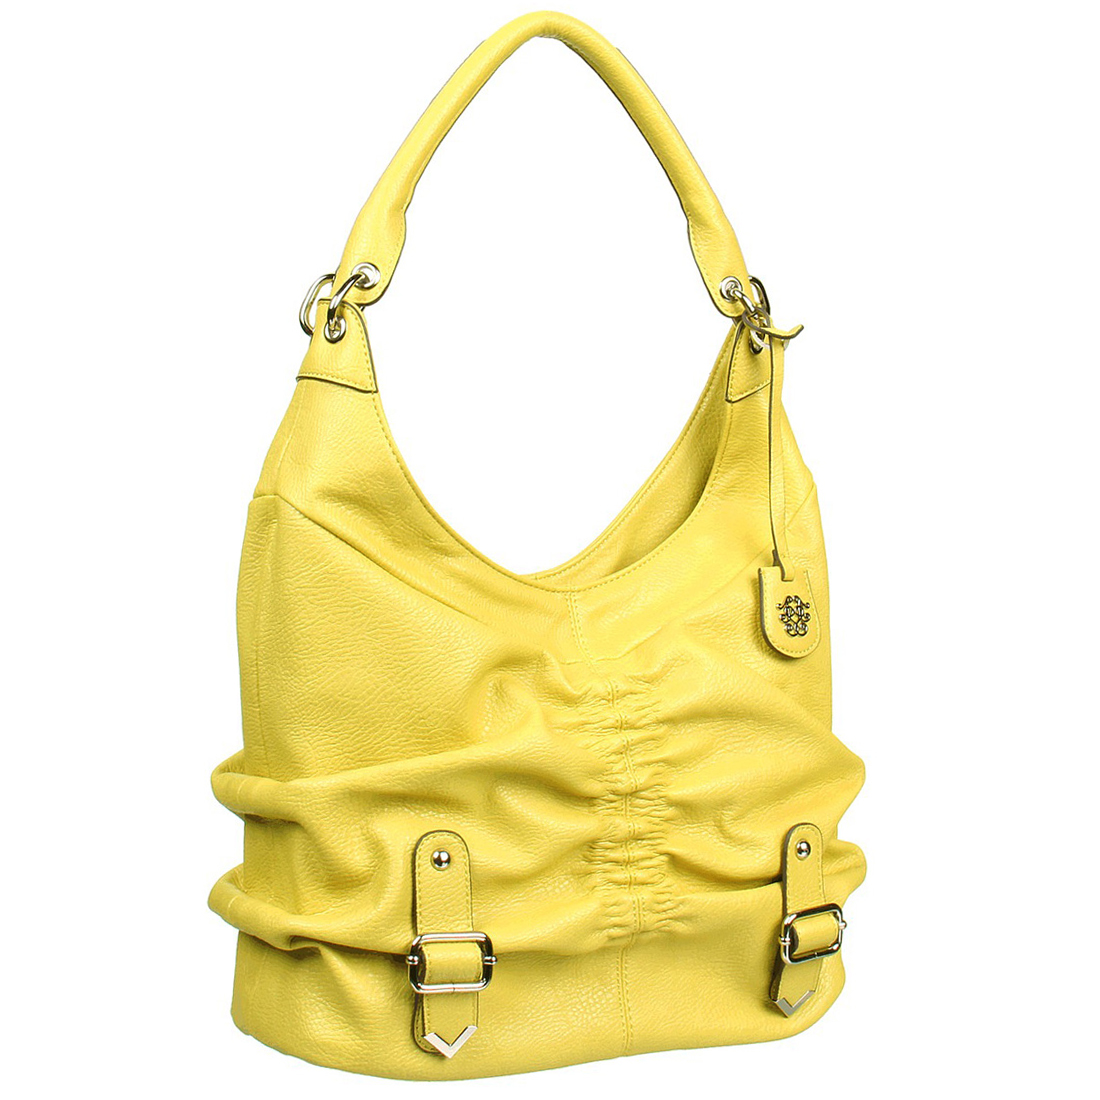 Jessica Simpson Lemon JS5132 Trish Hobo Bag | eBay